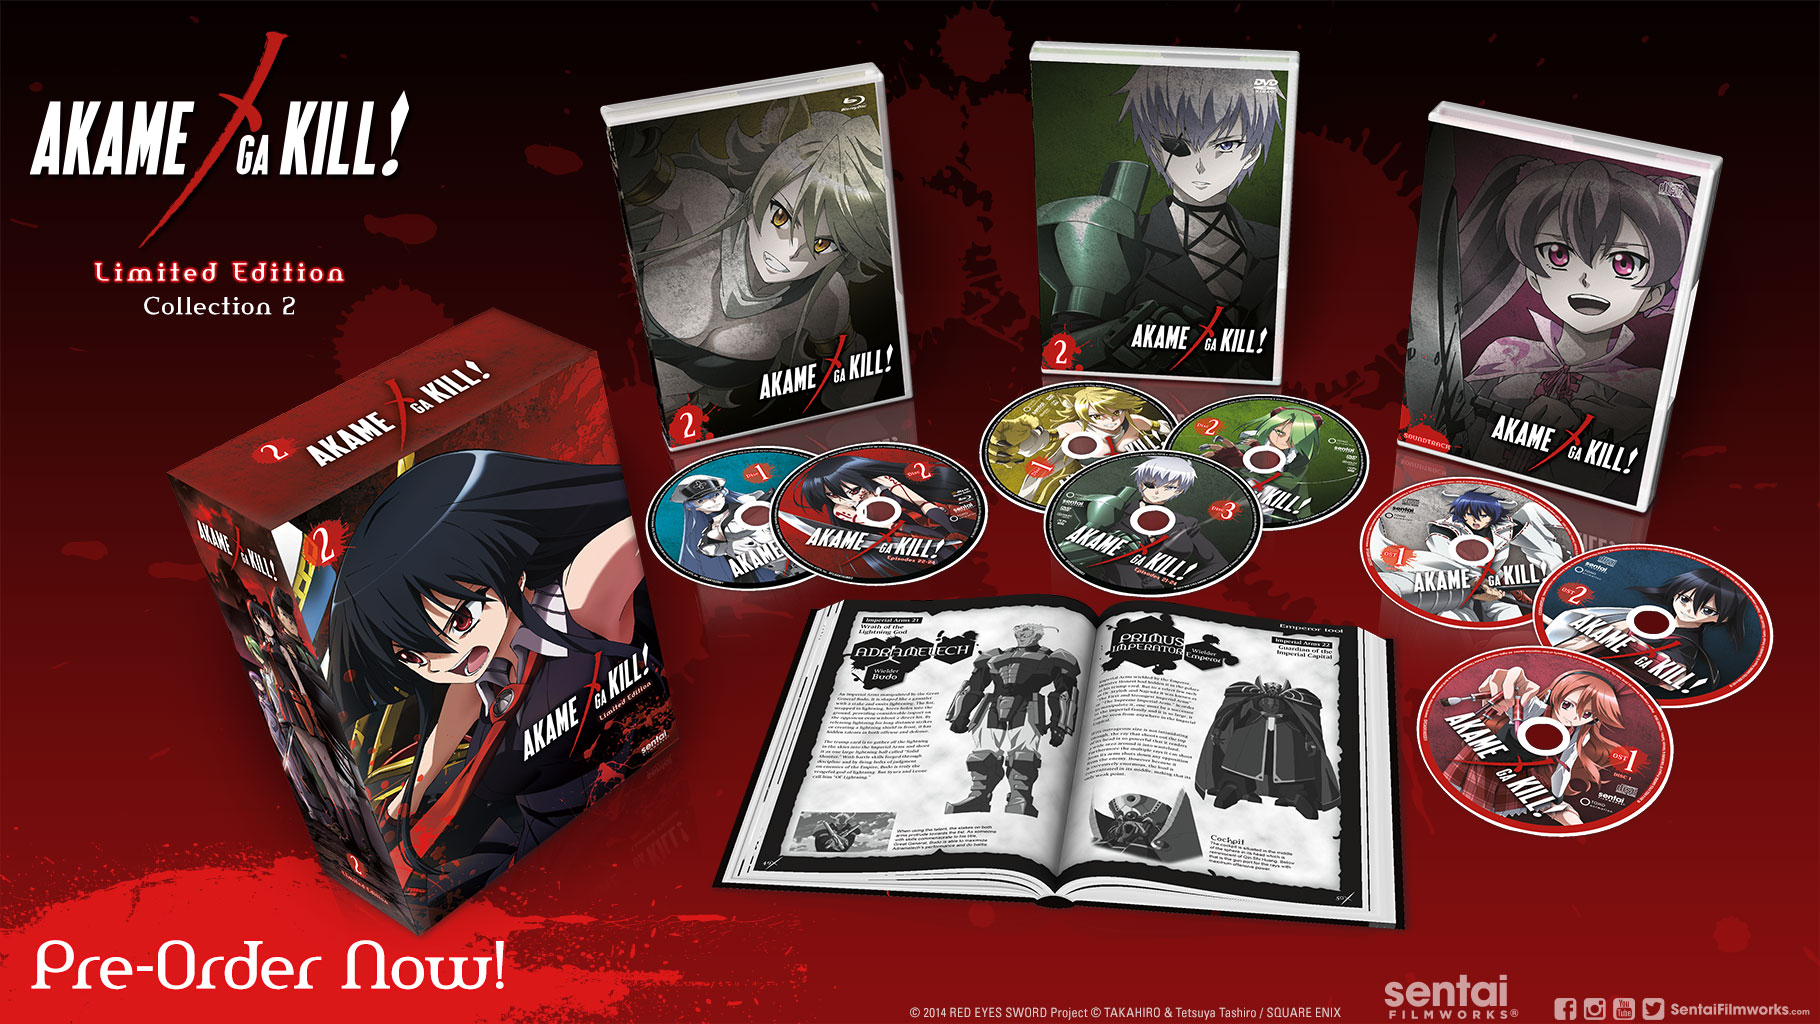 Akame ga Kill! Collection 2 Premium Box Set Contents Revealed